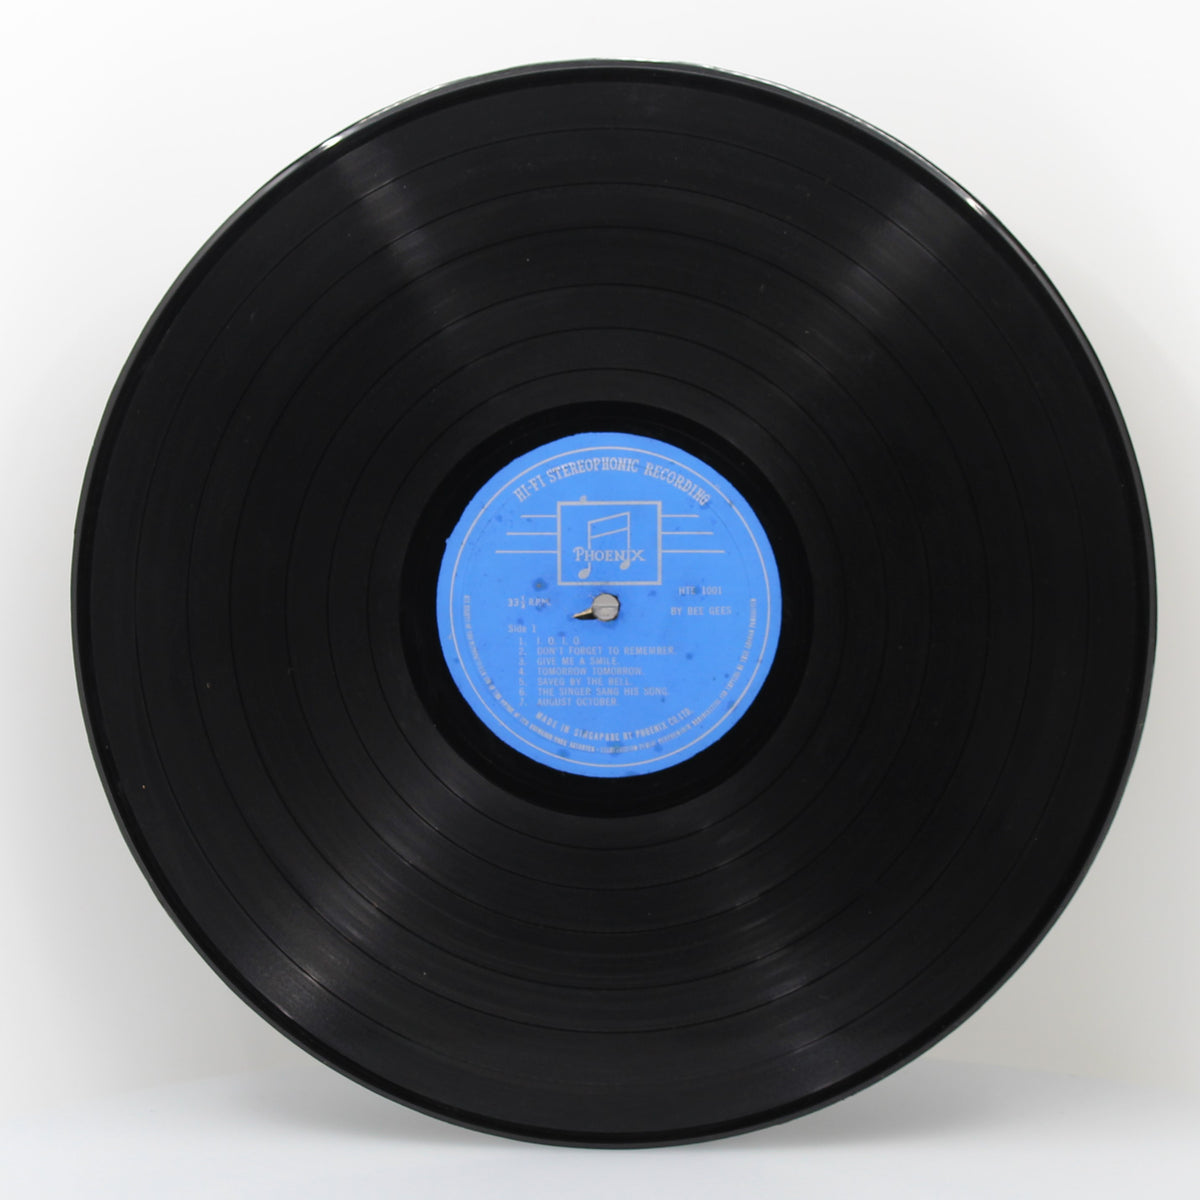 Bee Gees - Cucumber Castle, Vinyl, LP, Album, Unofficial Release, Singapore